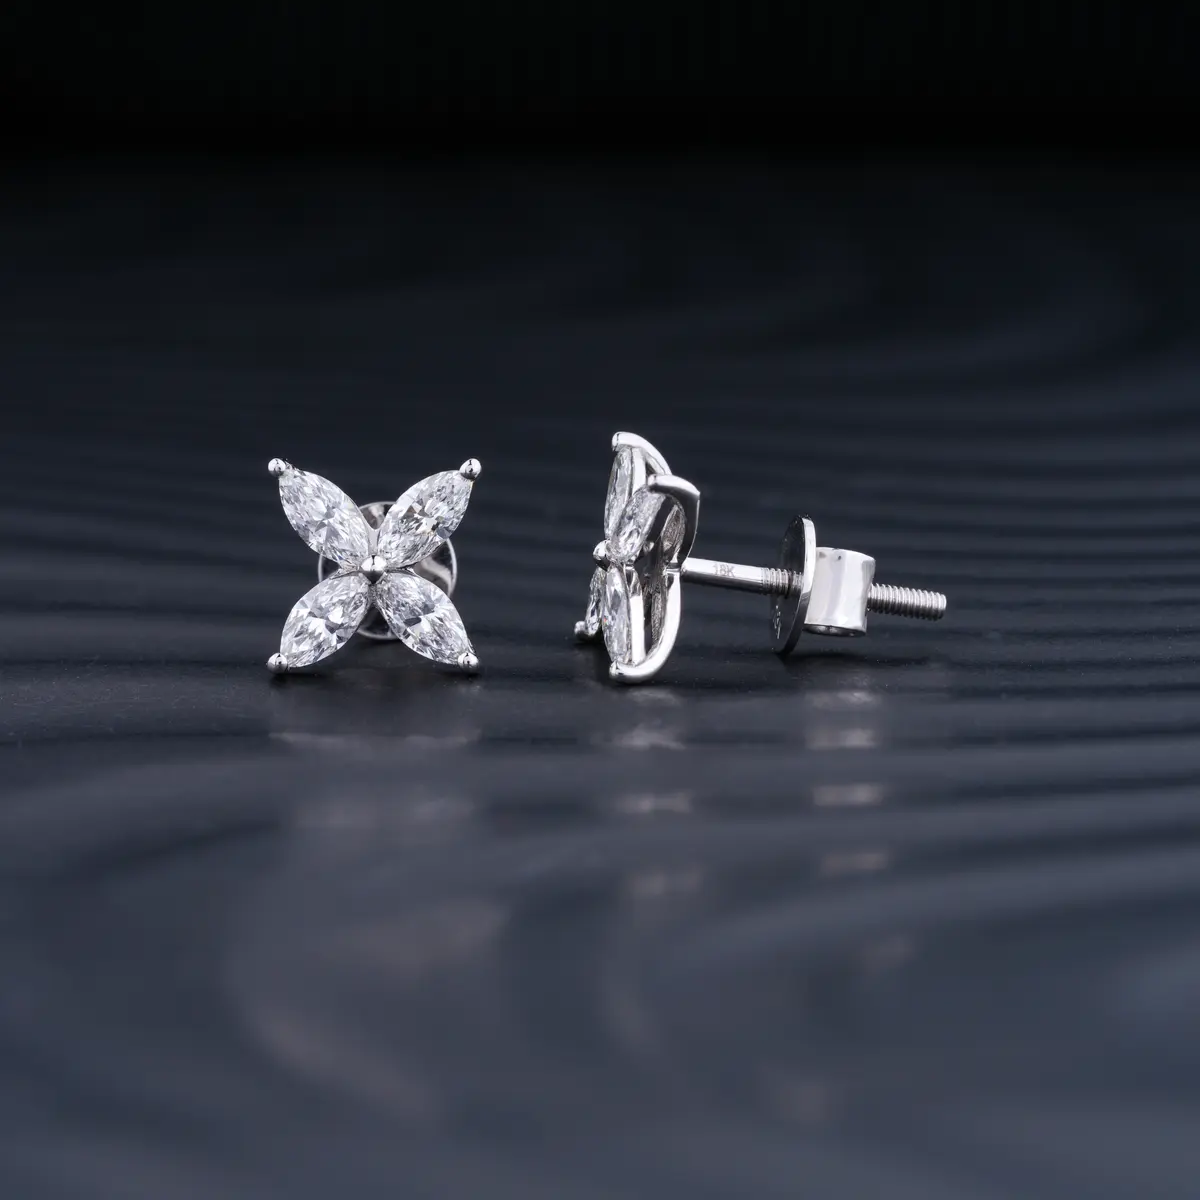 4 Marquise Diamond Earrings | Marquise Stud Earrings | Marquise Cut Diamond Earrings | Earthly Jewels